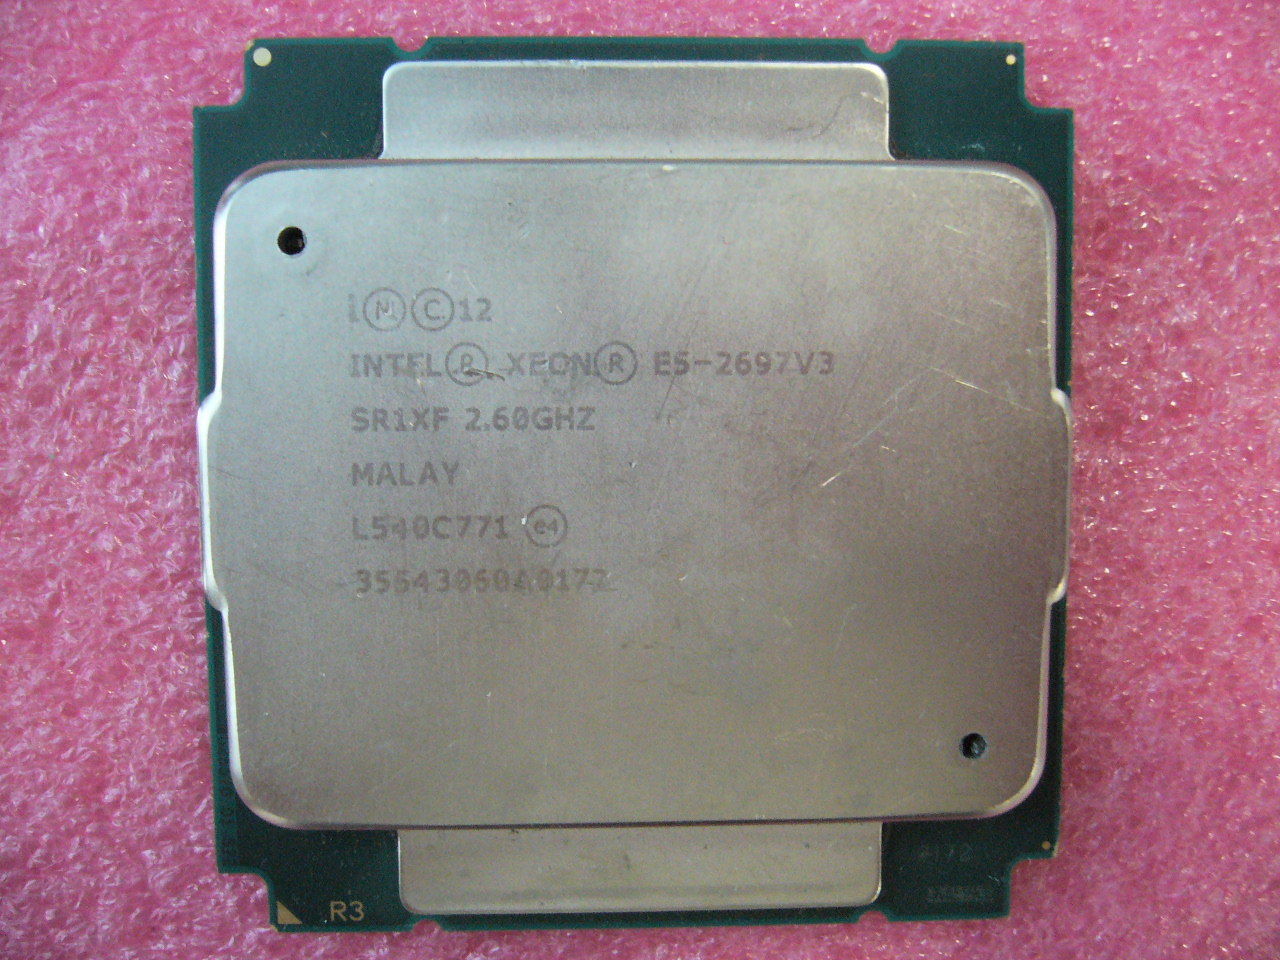 1pc Intel E5-2697 V3 Xeon CPU 14-Cores 2.6Ghz 35MB Cache LGA2011 SR1XF - Click Image to Close